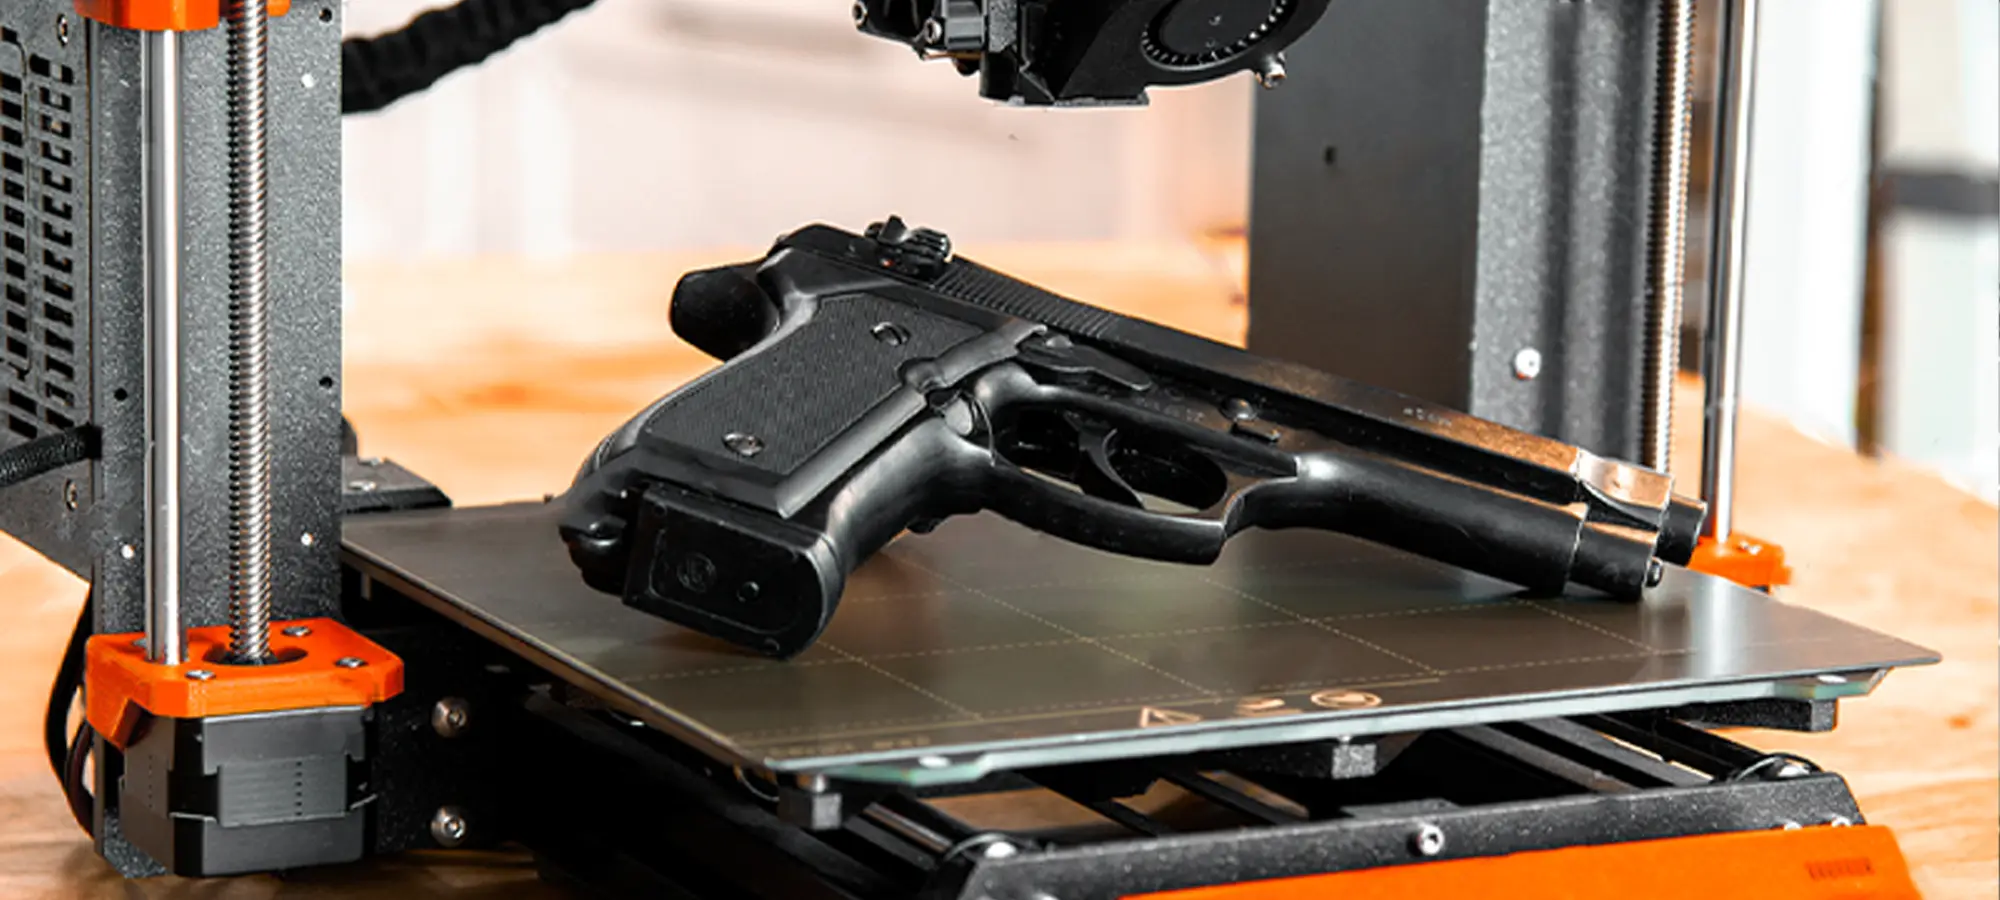 3D Printed Gun Parts